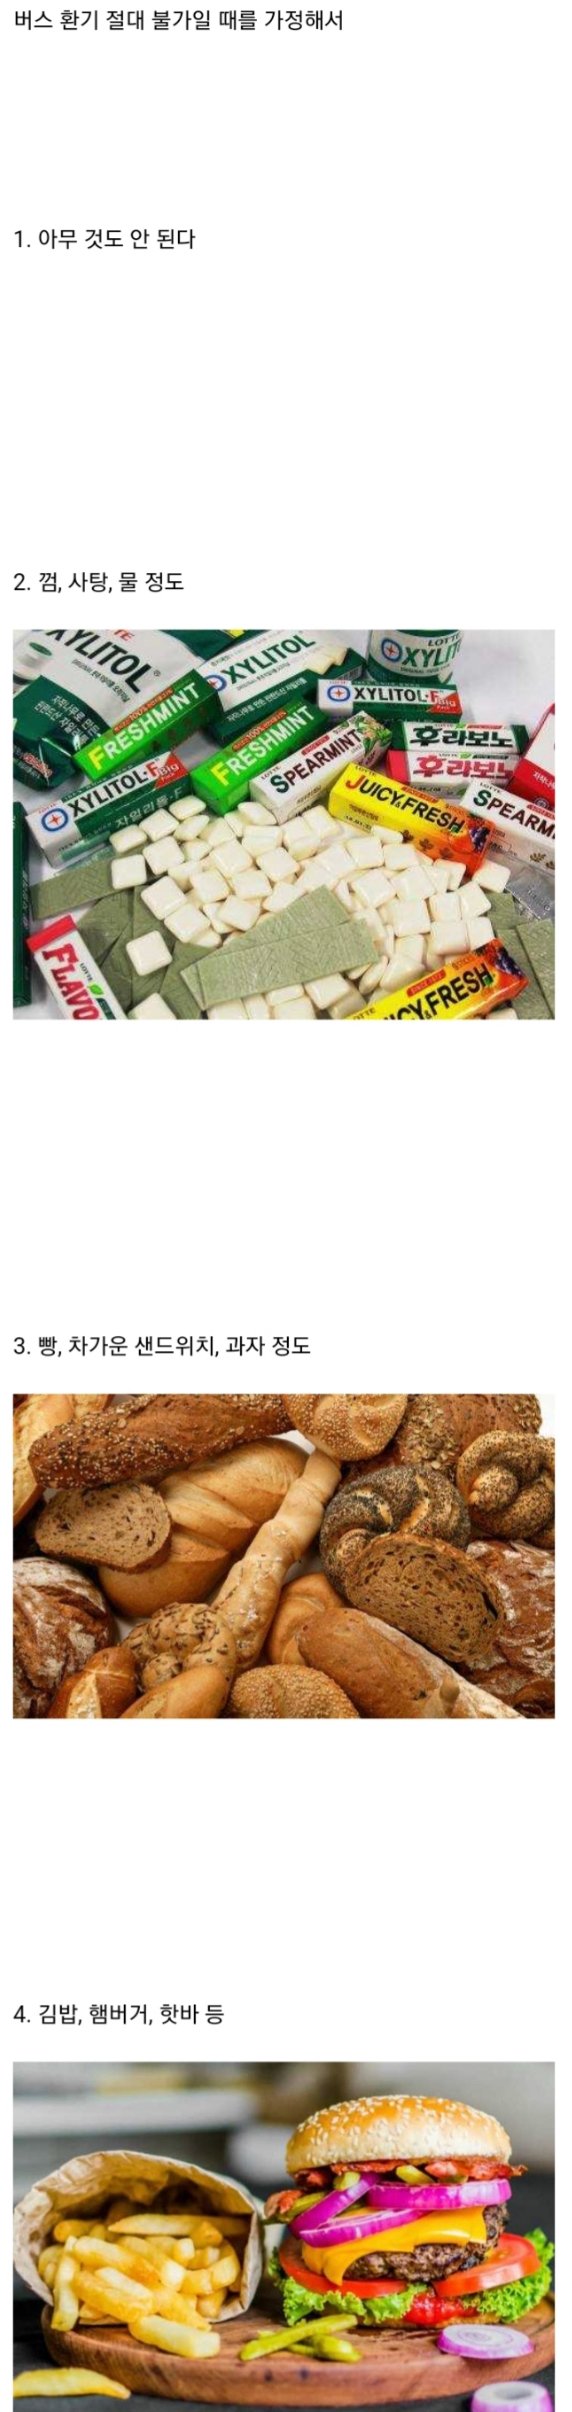 nokbeon.net-고속버스 안에서 먹어도 되는 음식 기준-1번 이미지